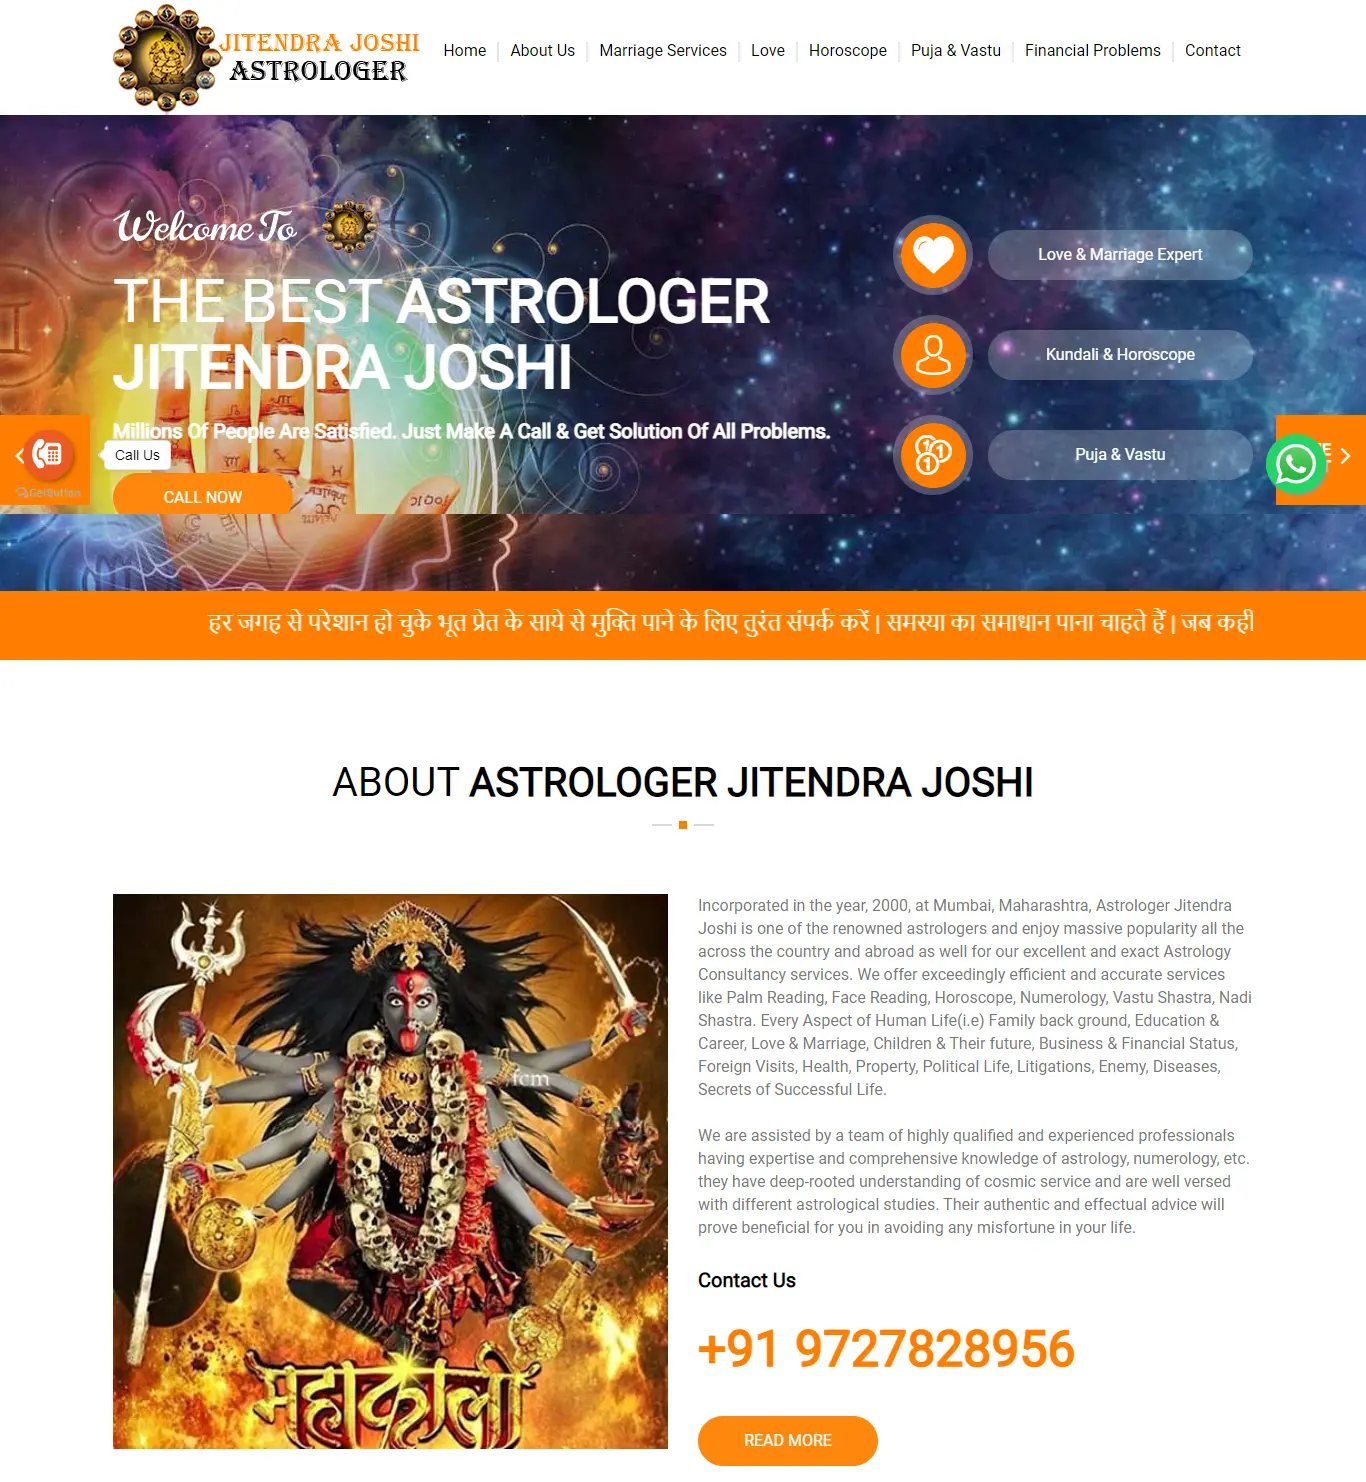 Astrologer Webstie Design near me